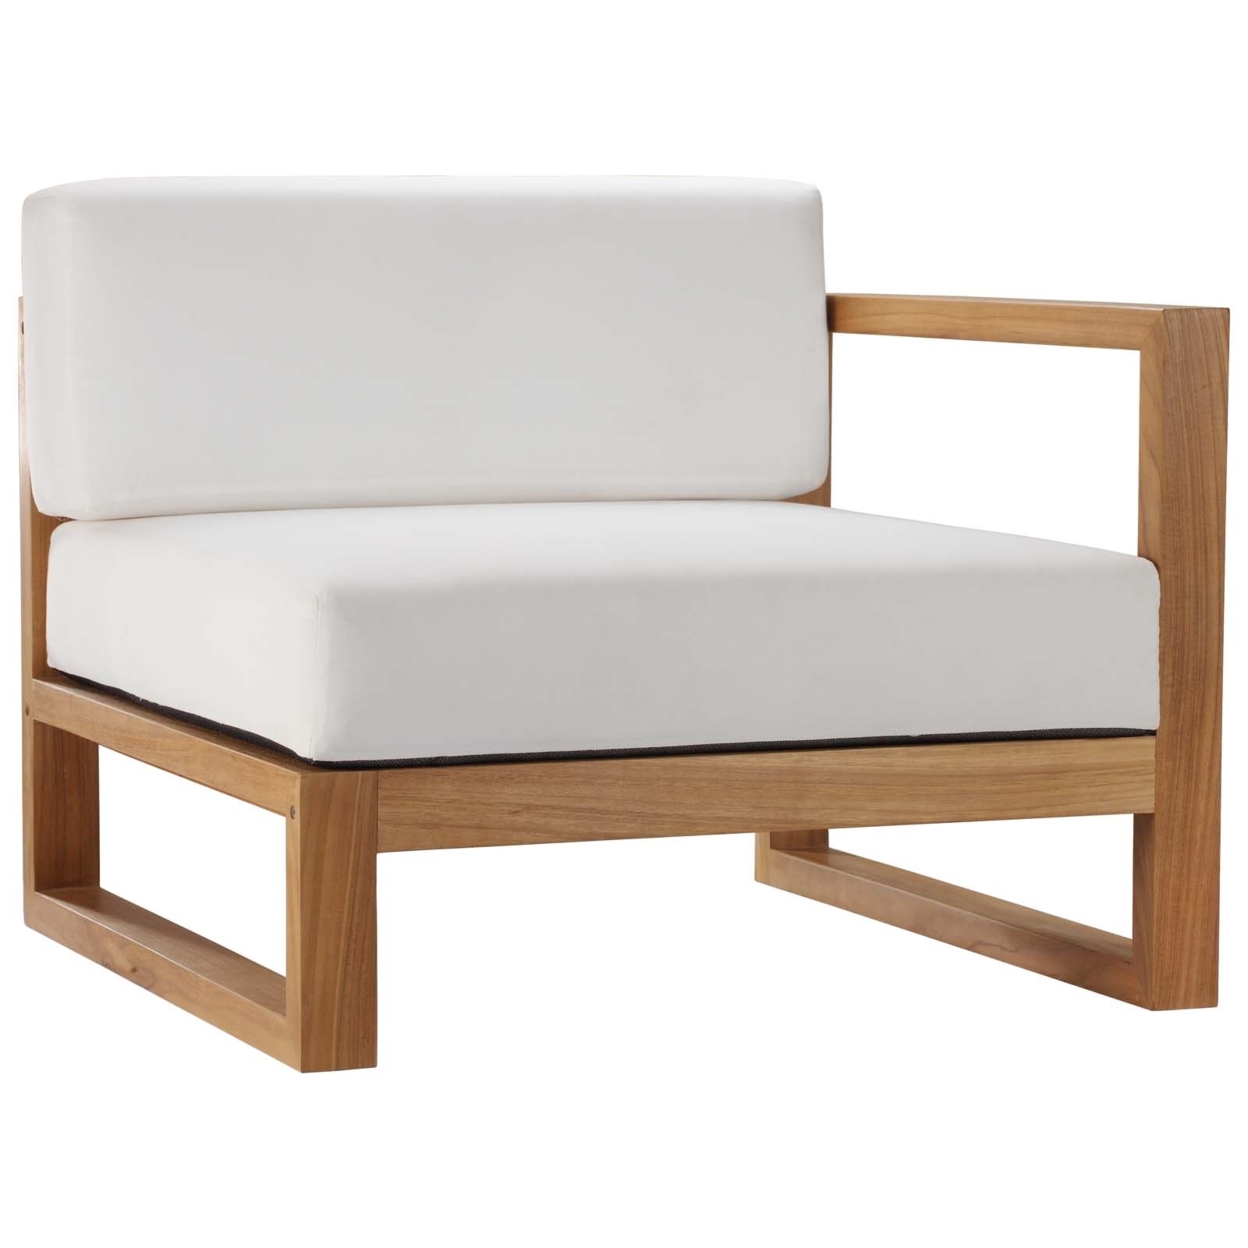 Upland Outdoor Patio Teak Wood 3-Piece Sectional Sofa Set, Natural White